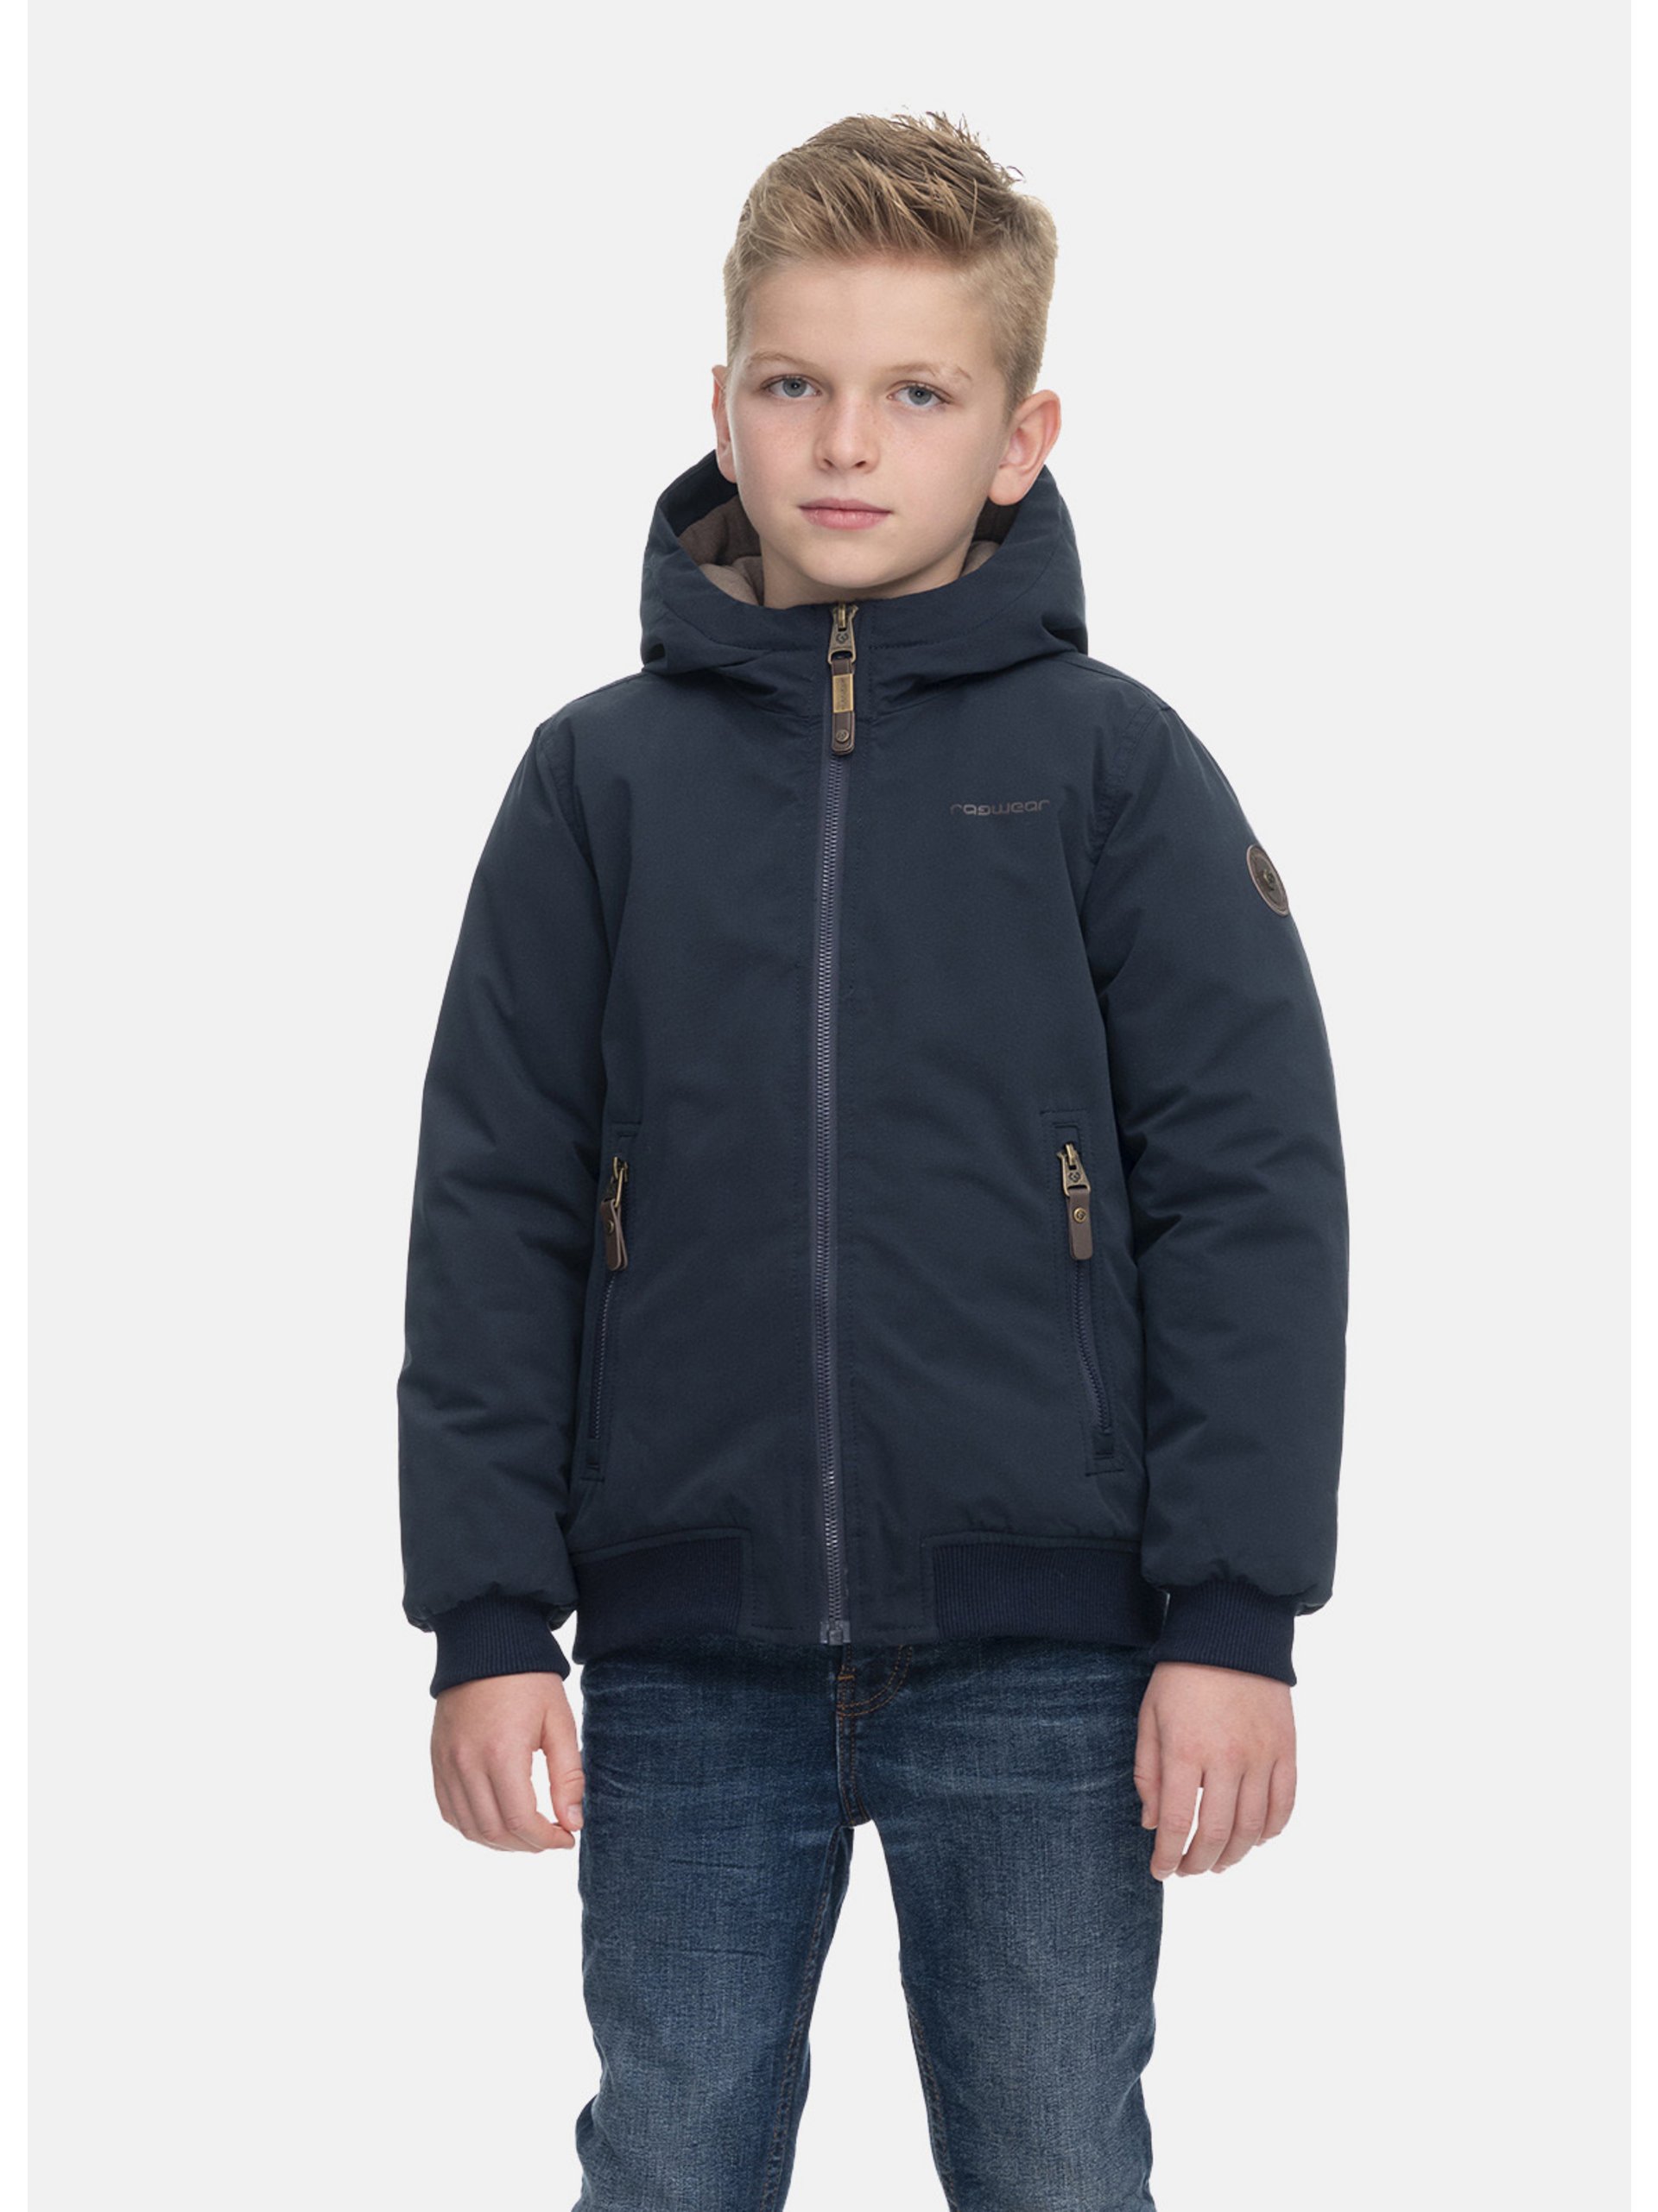 Ragwear Jungen Winterjacke - Maddew kaufen online